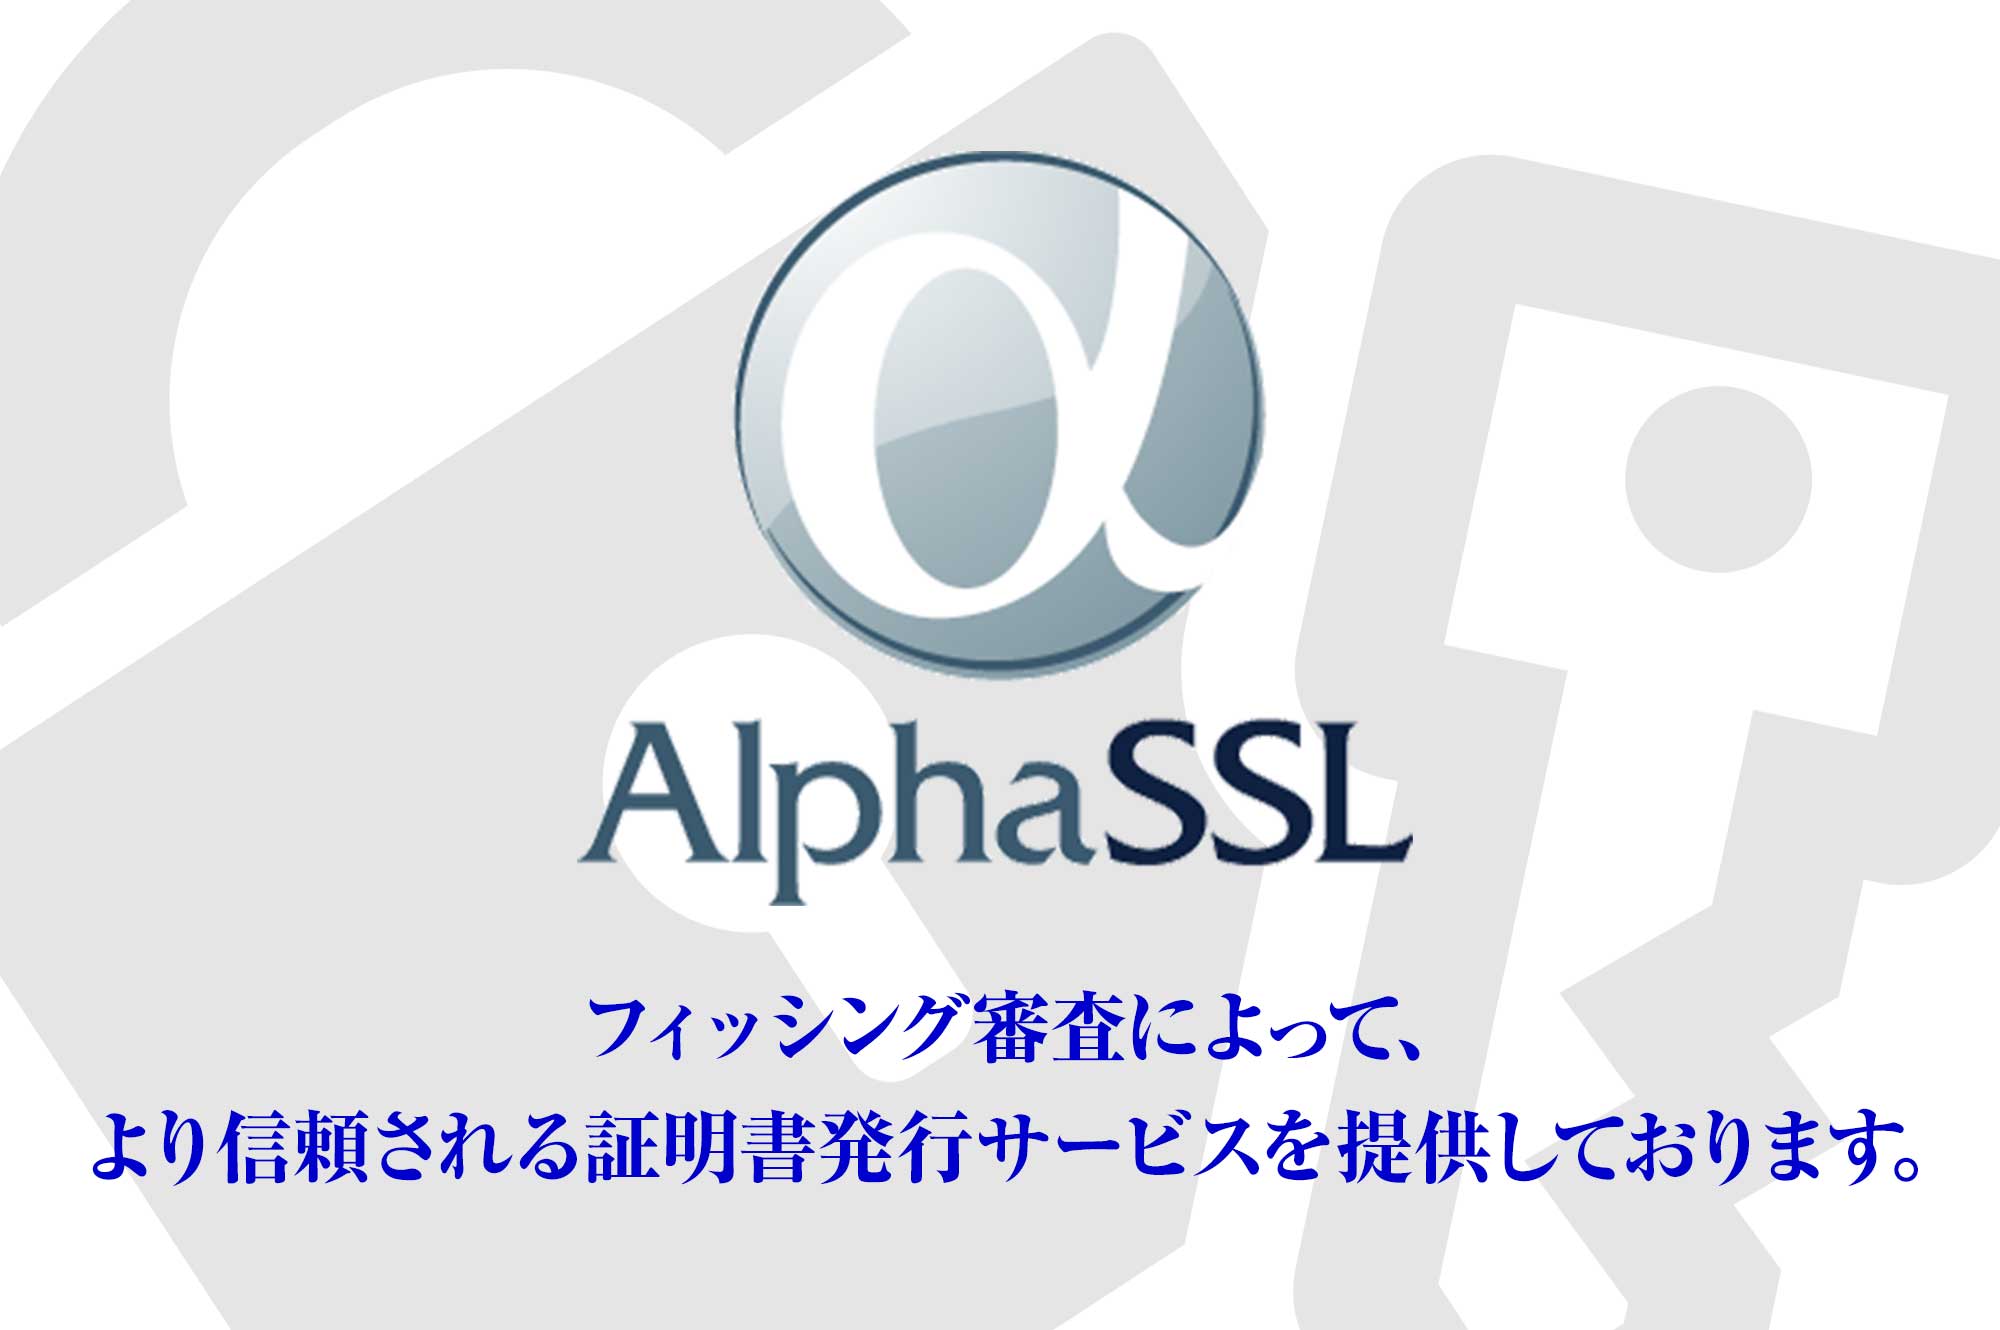 「Alpha SSL証明書」は、2048（256bit）SHA-2完全対応。99%以上ブラウザ対応。WebTrust準拠。デュアルアクセス対応。ライセンスフリー。最大10万円保証。サイトシール付「Alpha SSL Plus証明書」。複数サブドメインで利用可能「Alpha SSL Wild Card証明書」。